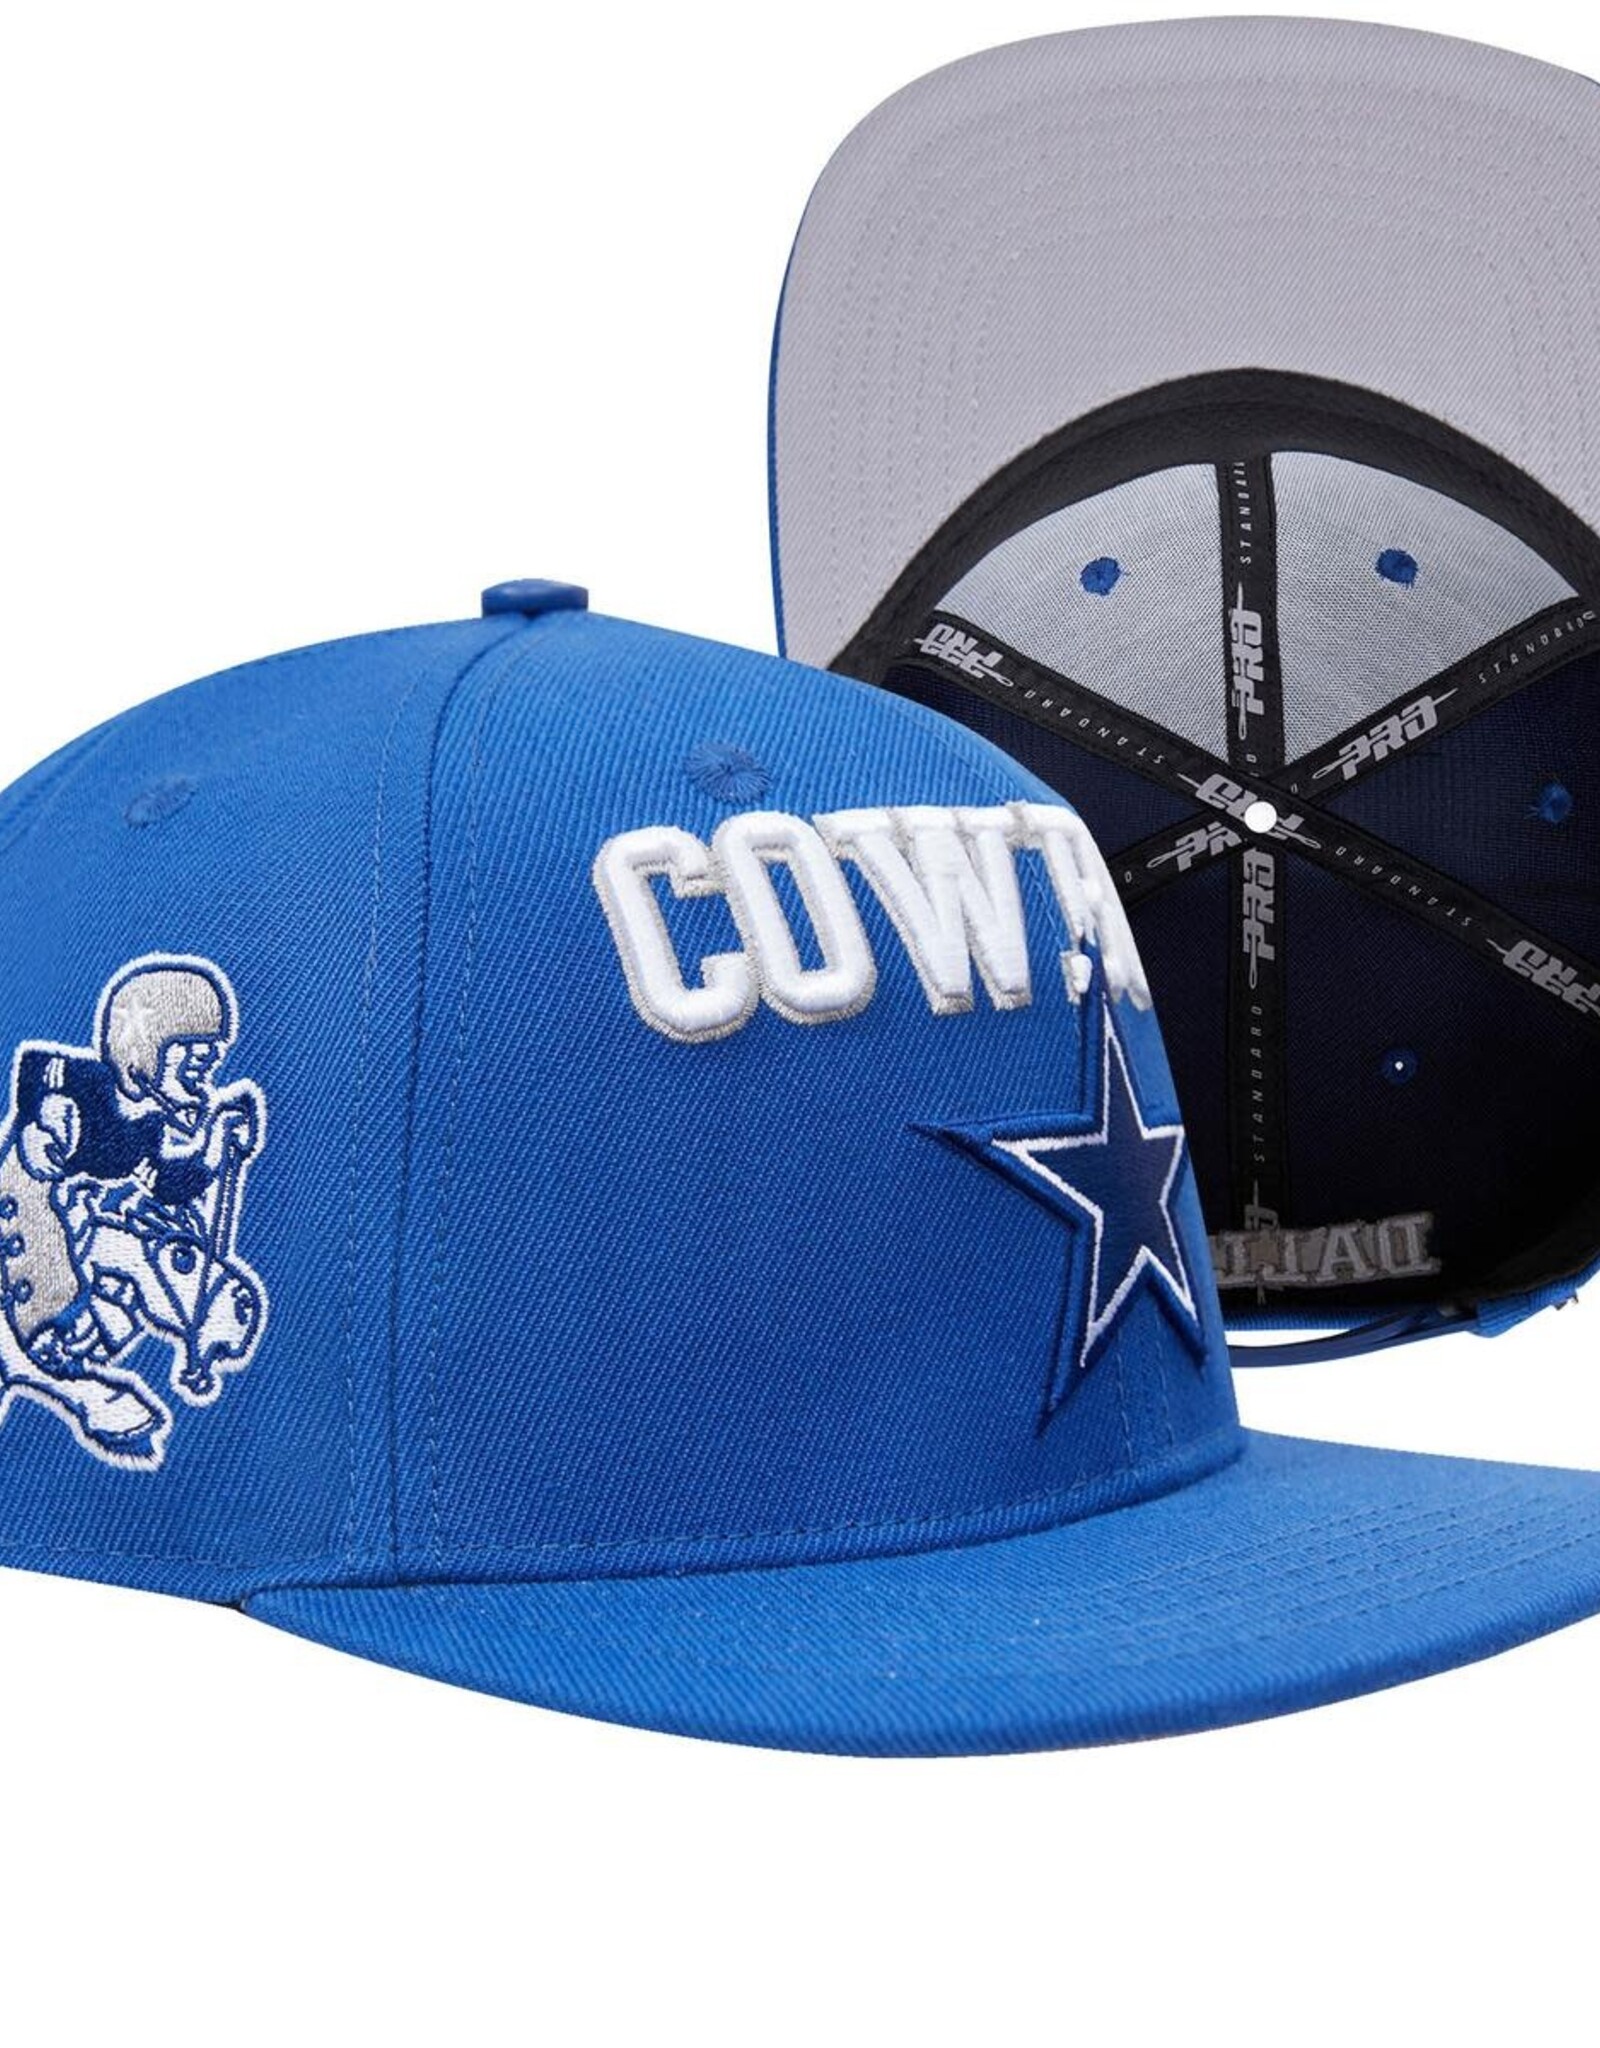 Pro Standard Dallas Cowboys Retro Classic Snapback Cap - Blue